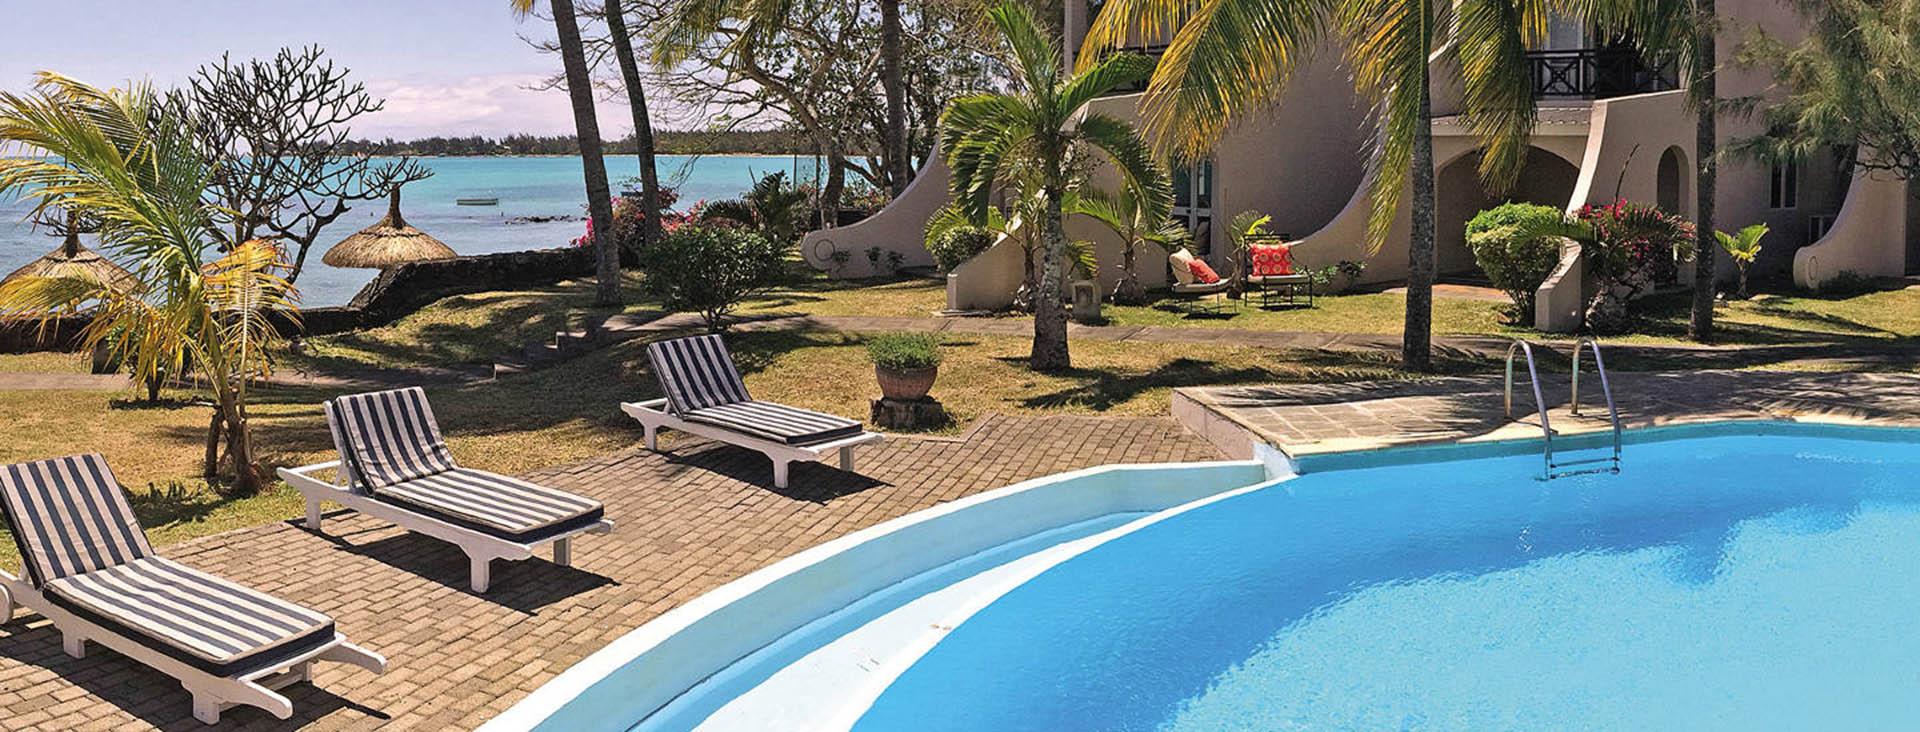 Holiday Rental beachfront Mauritius